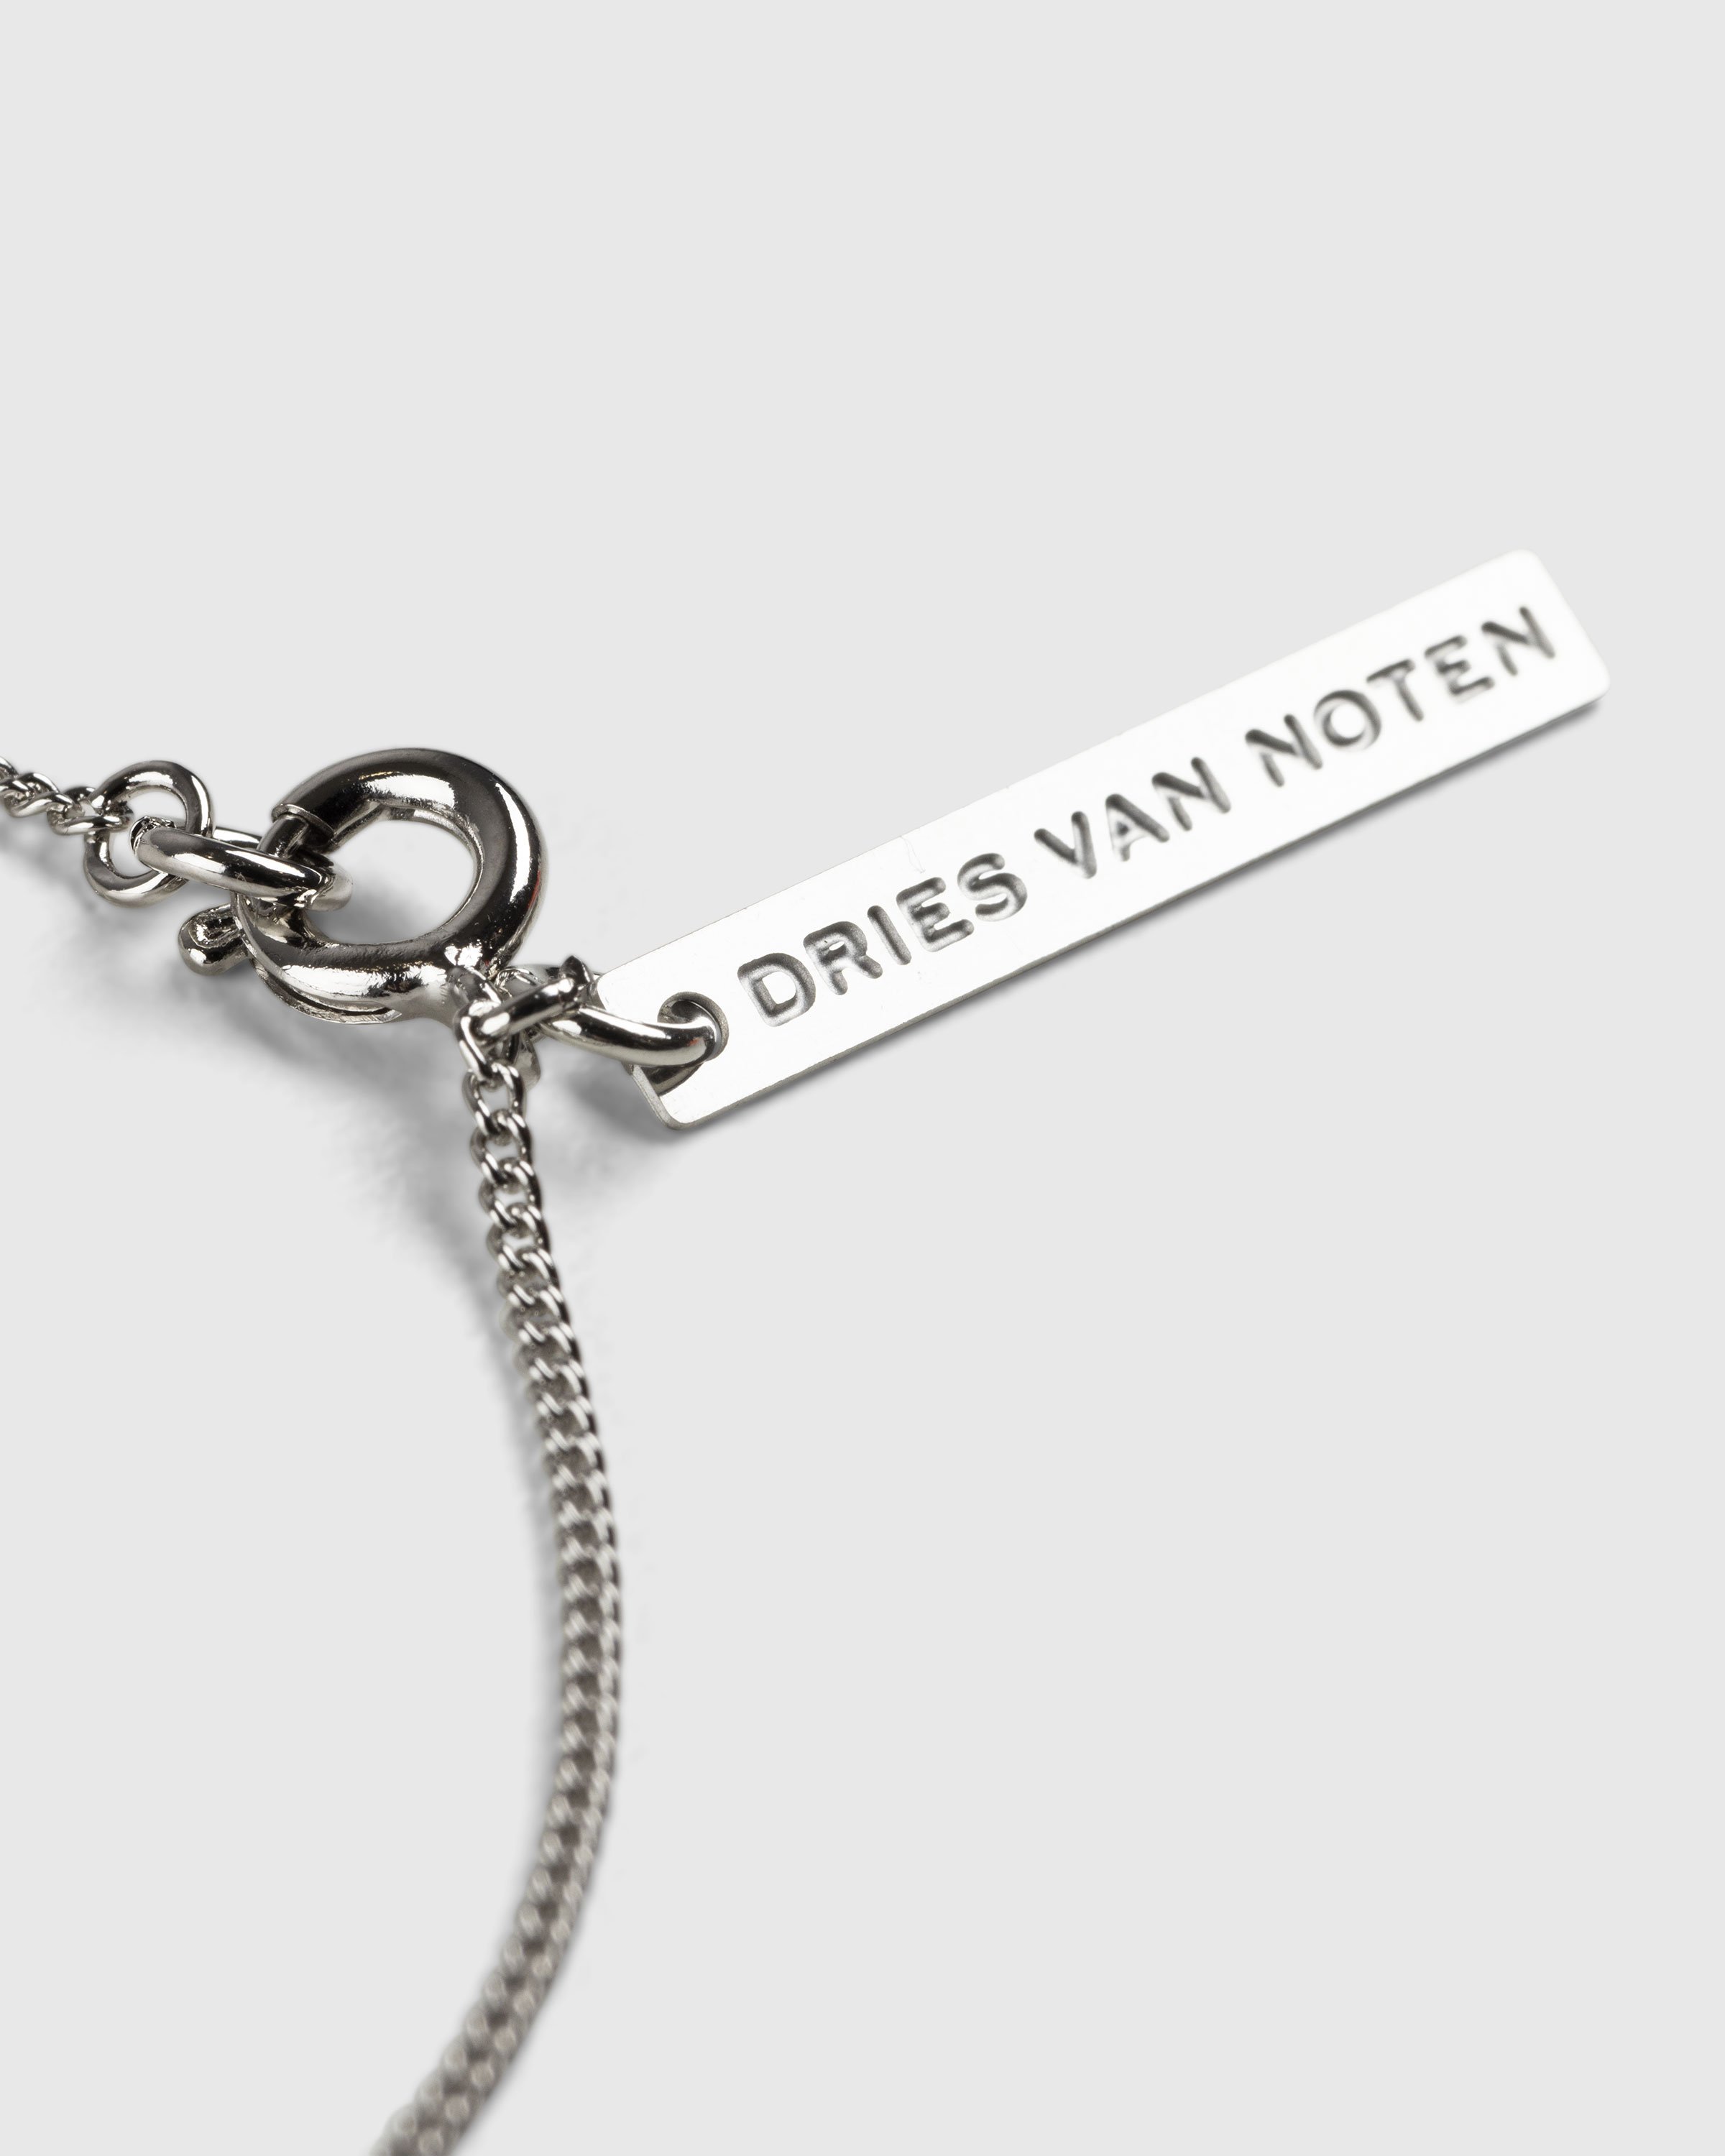 Dries van Noten - Logo Tag Necklace Silver - Accessories - Silver - Image 2